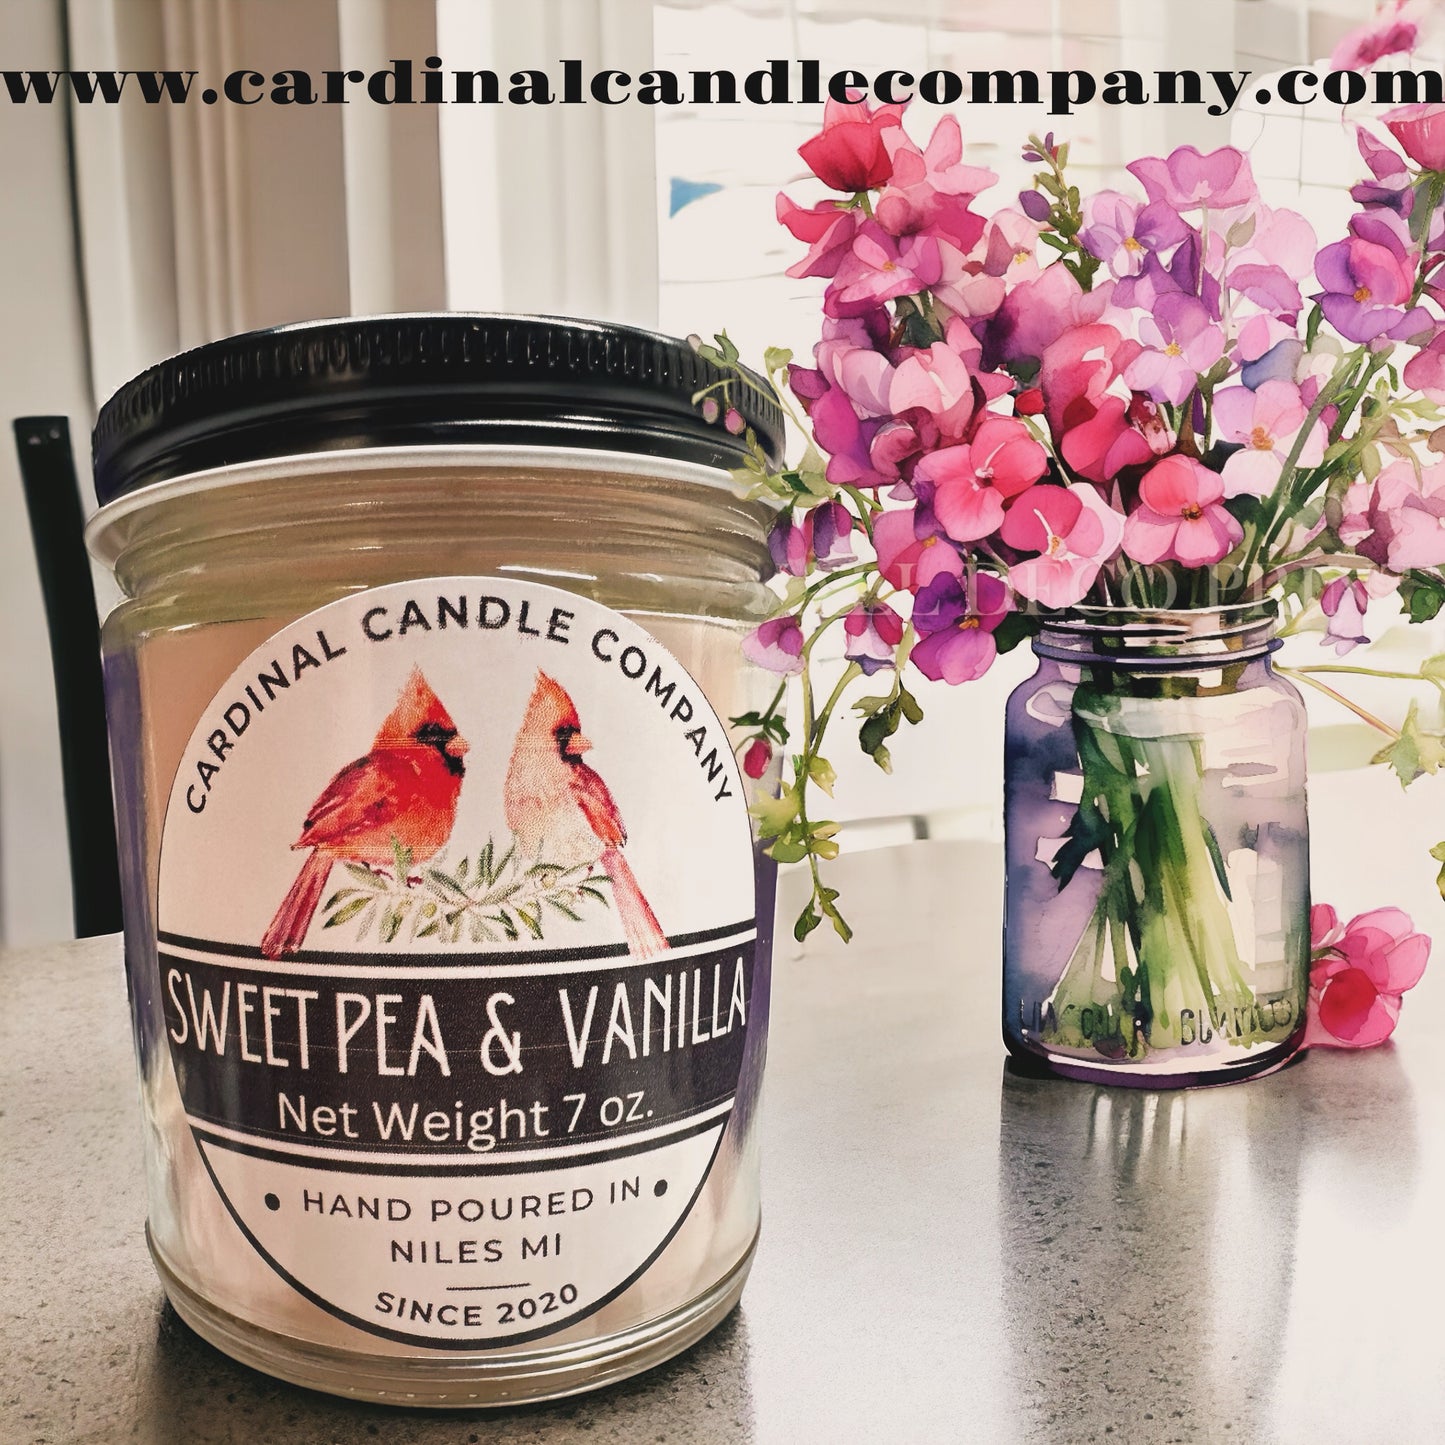 Sweet Pea & Vanilla 7 oz candle